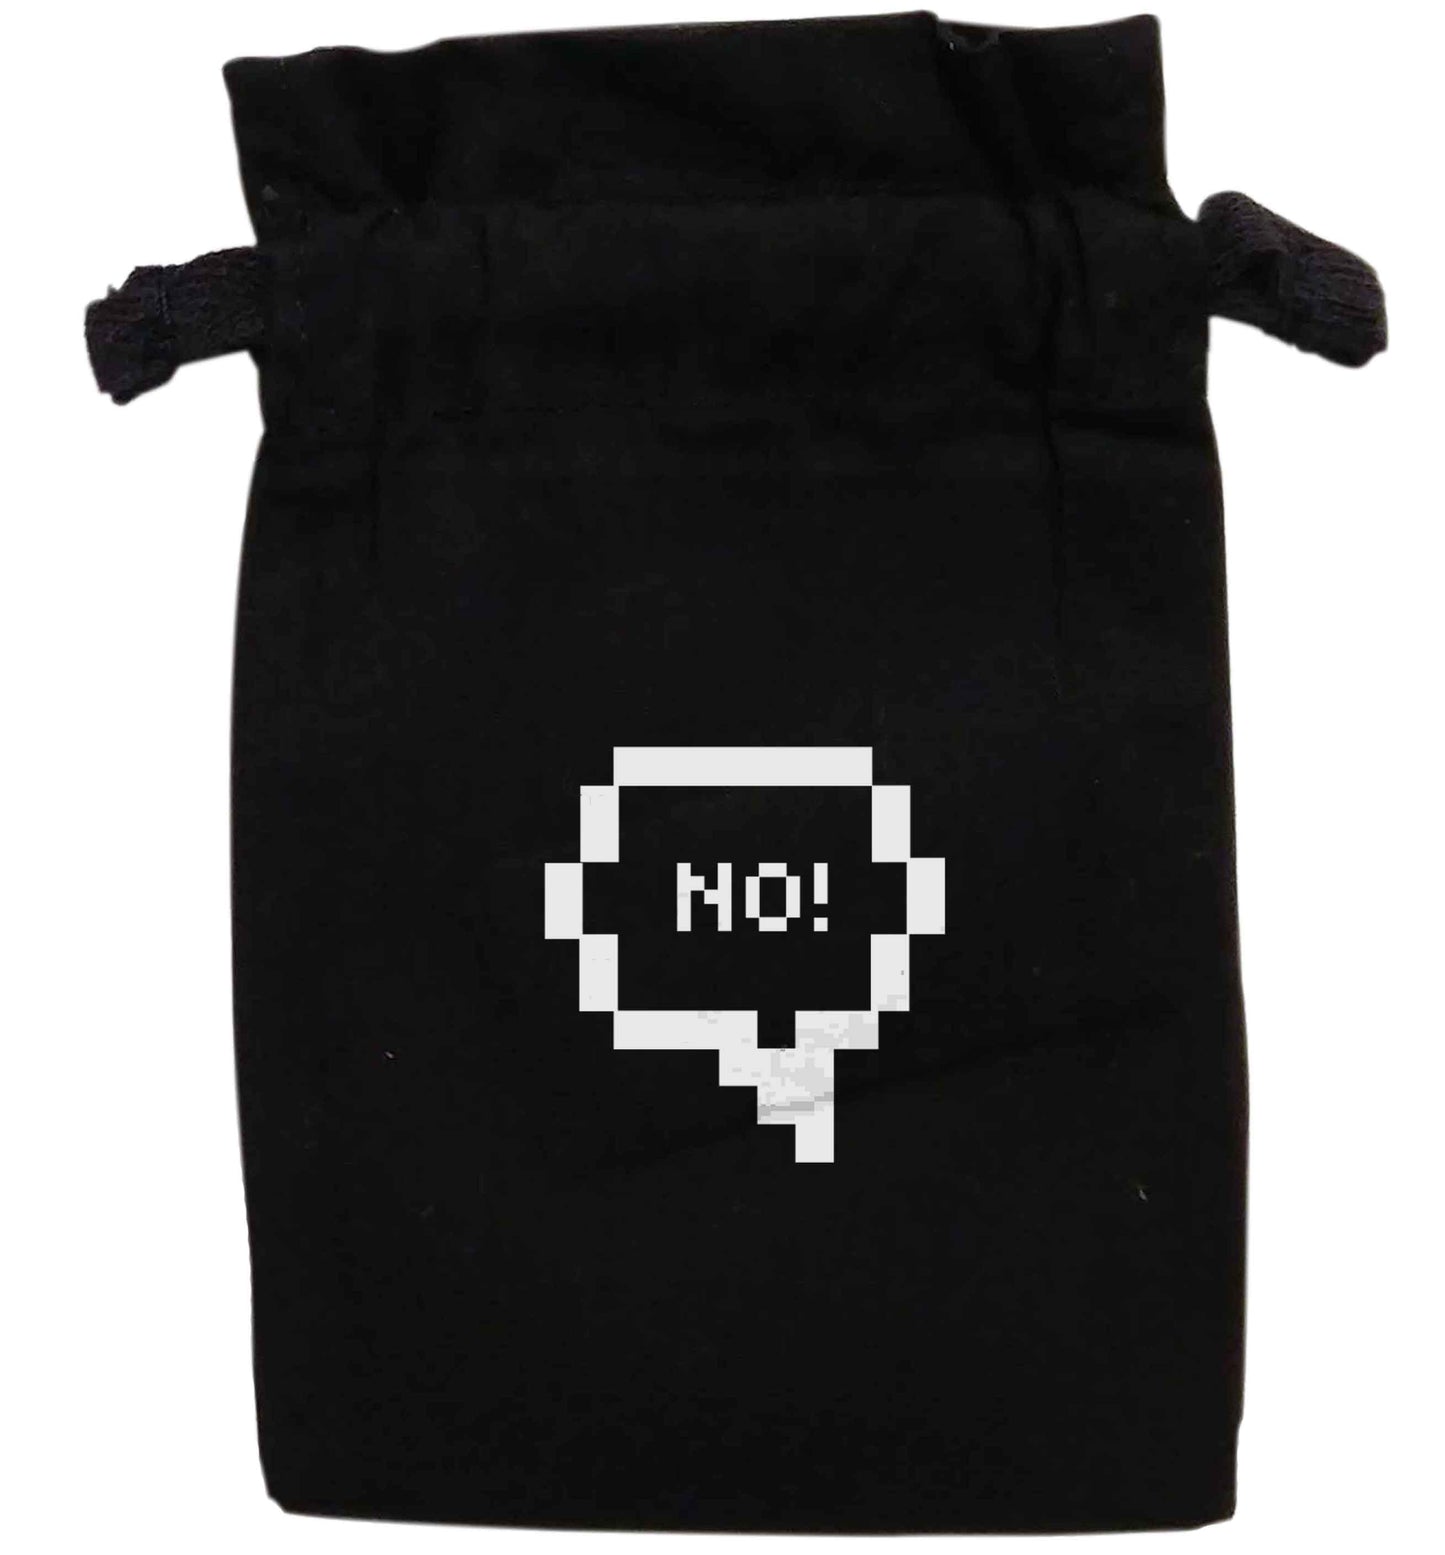 No | XS - L | Pouch / Drawstring bag / Sack | Organic Cotton | Bulk discounts available!